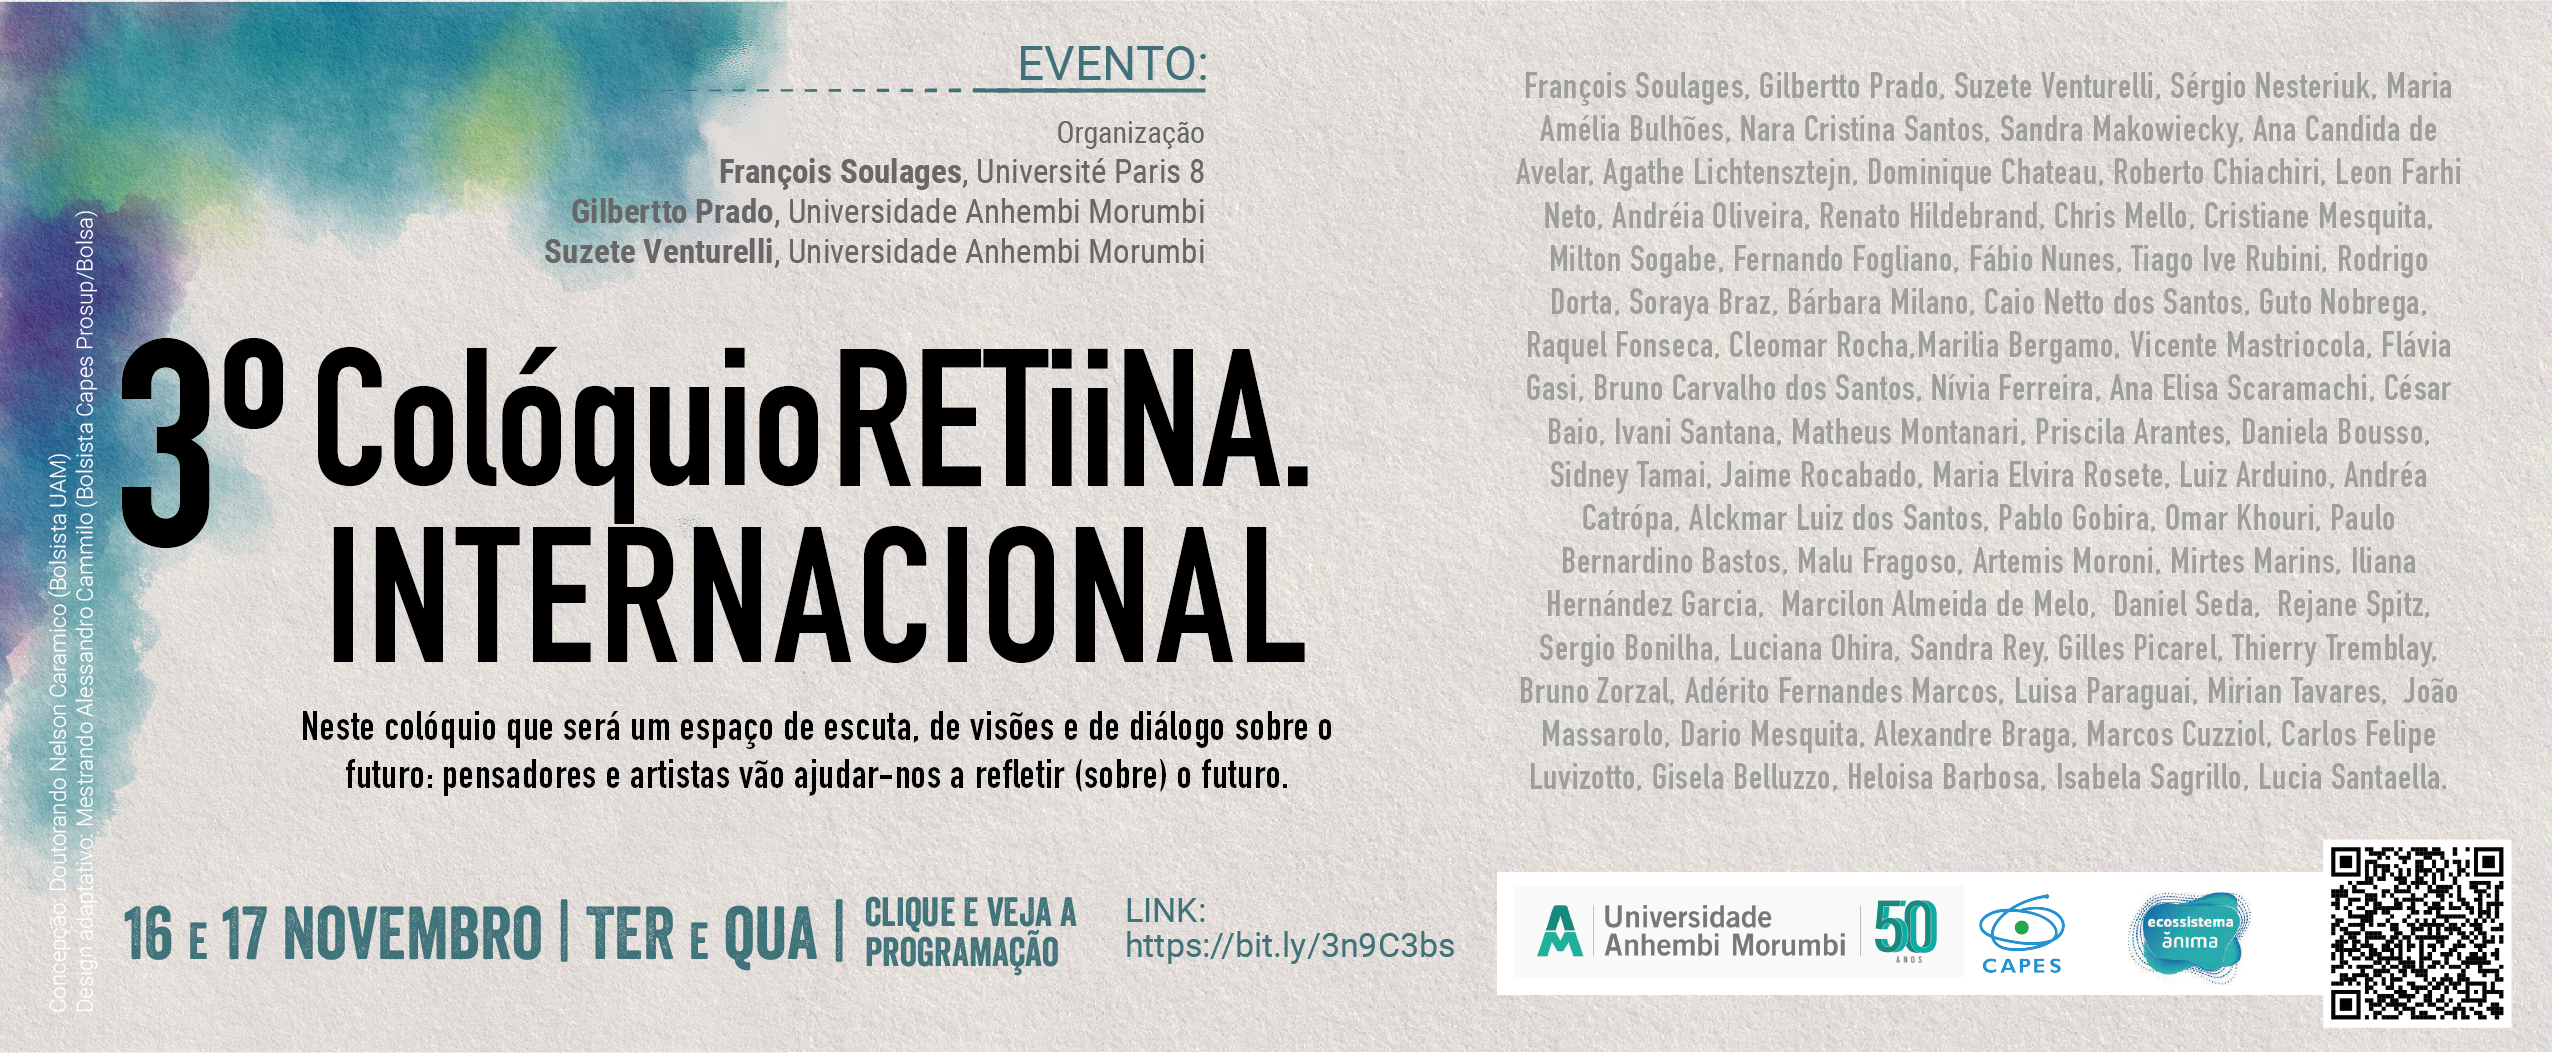 Banner - 3 coloquio Retiina International